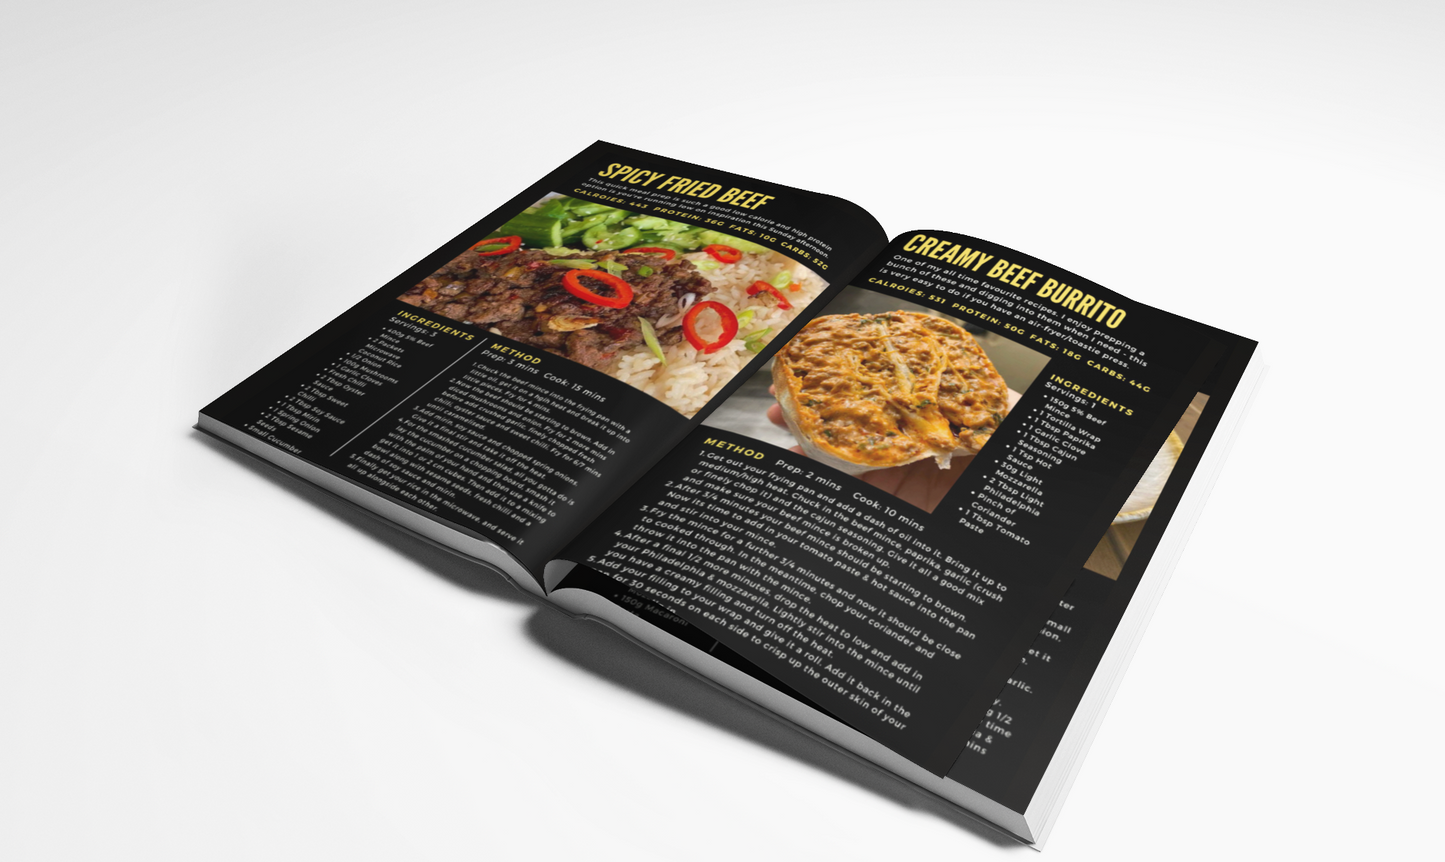 100+ Easy High Protein Recipes - eCookbook